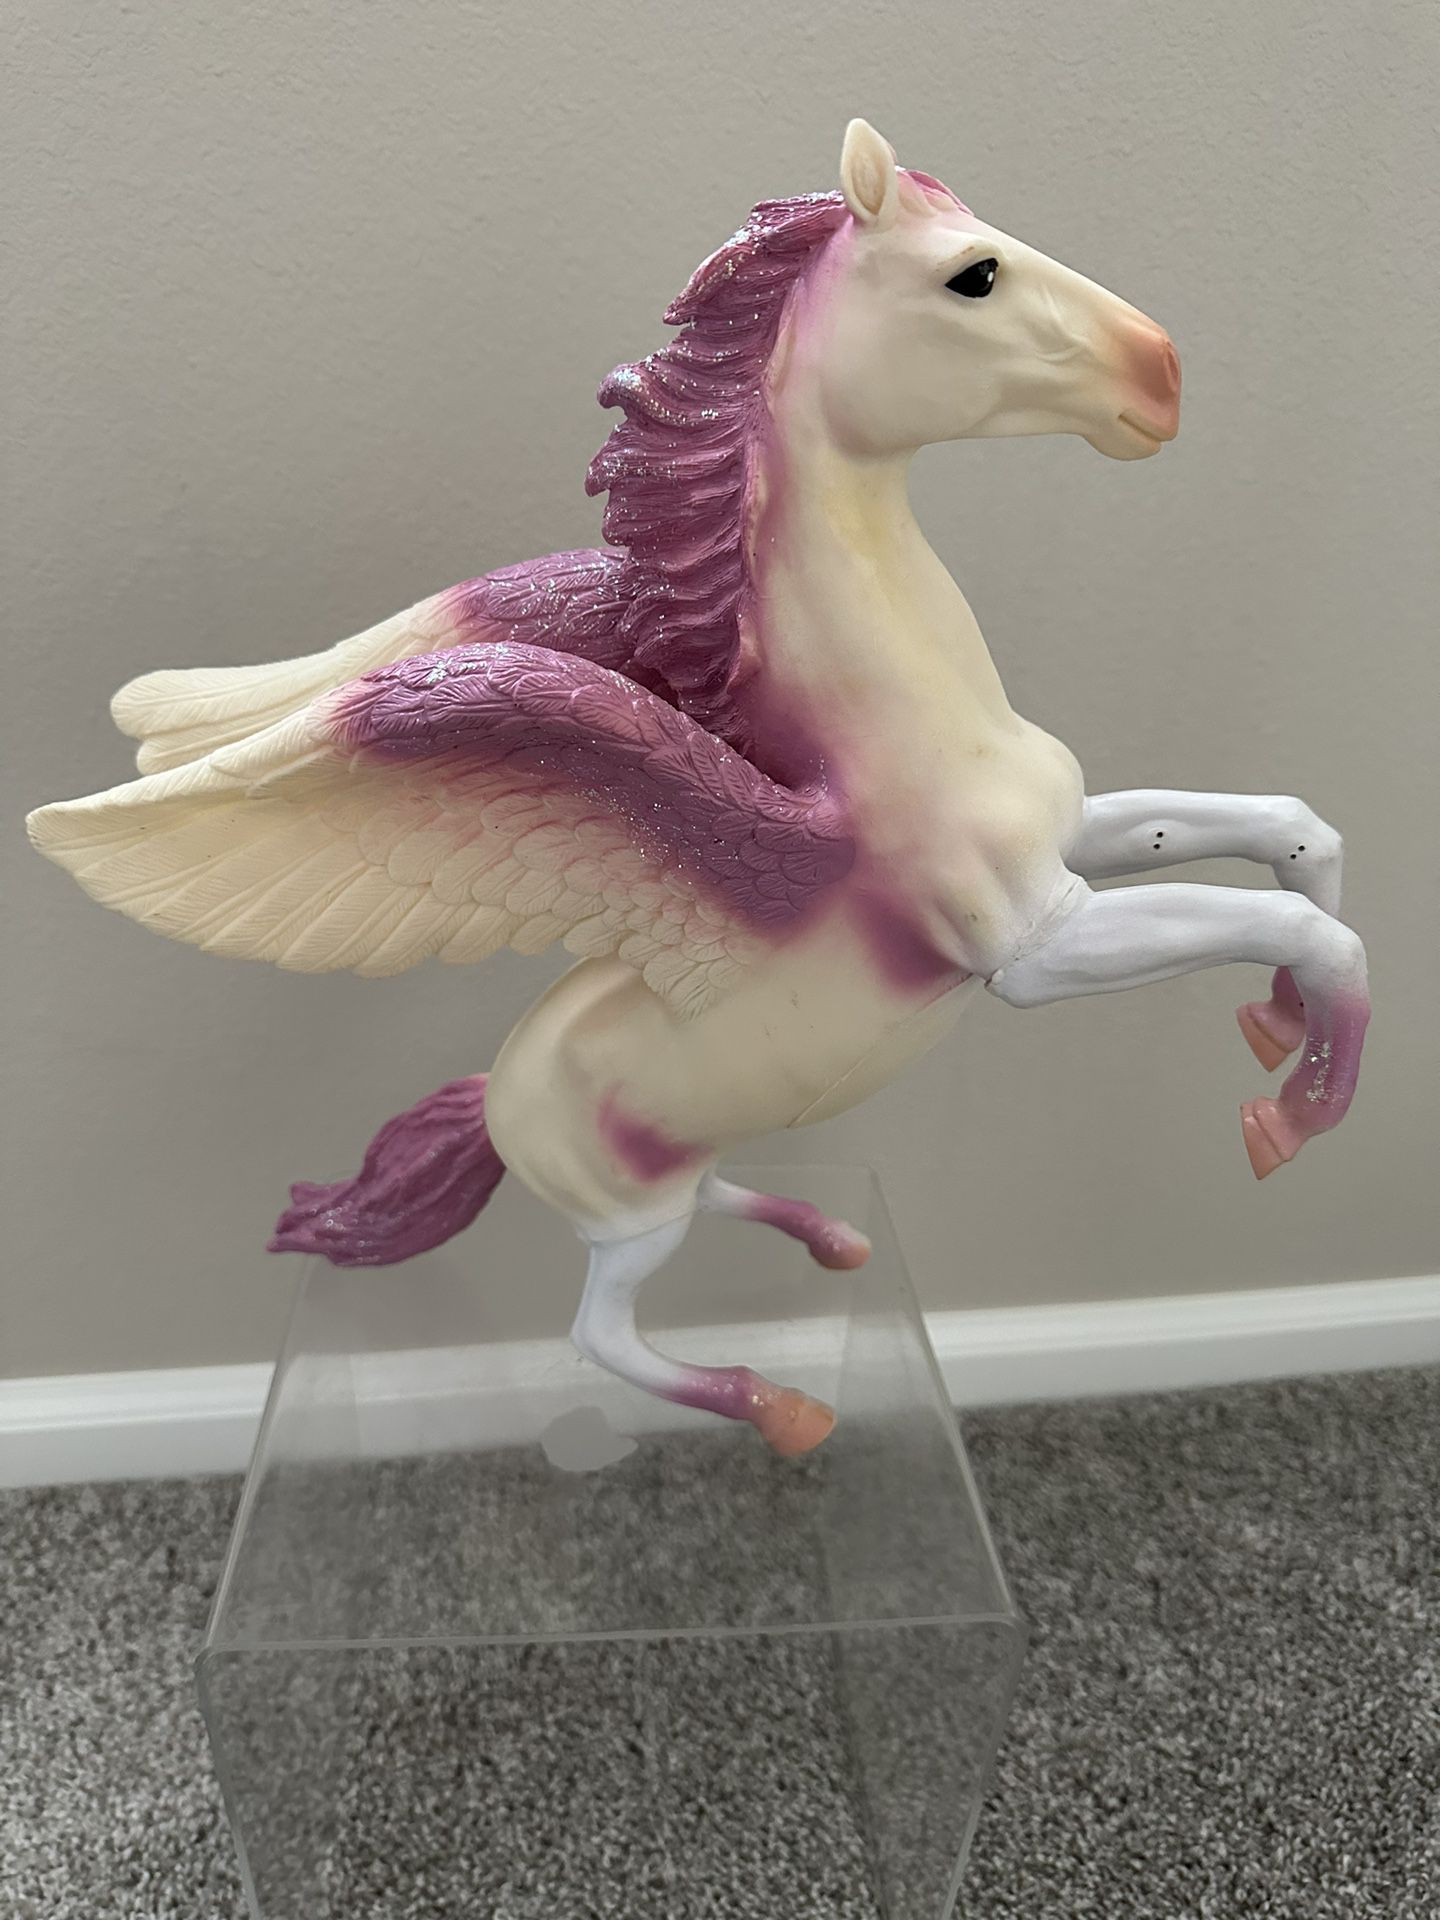 12" Pegasus